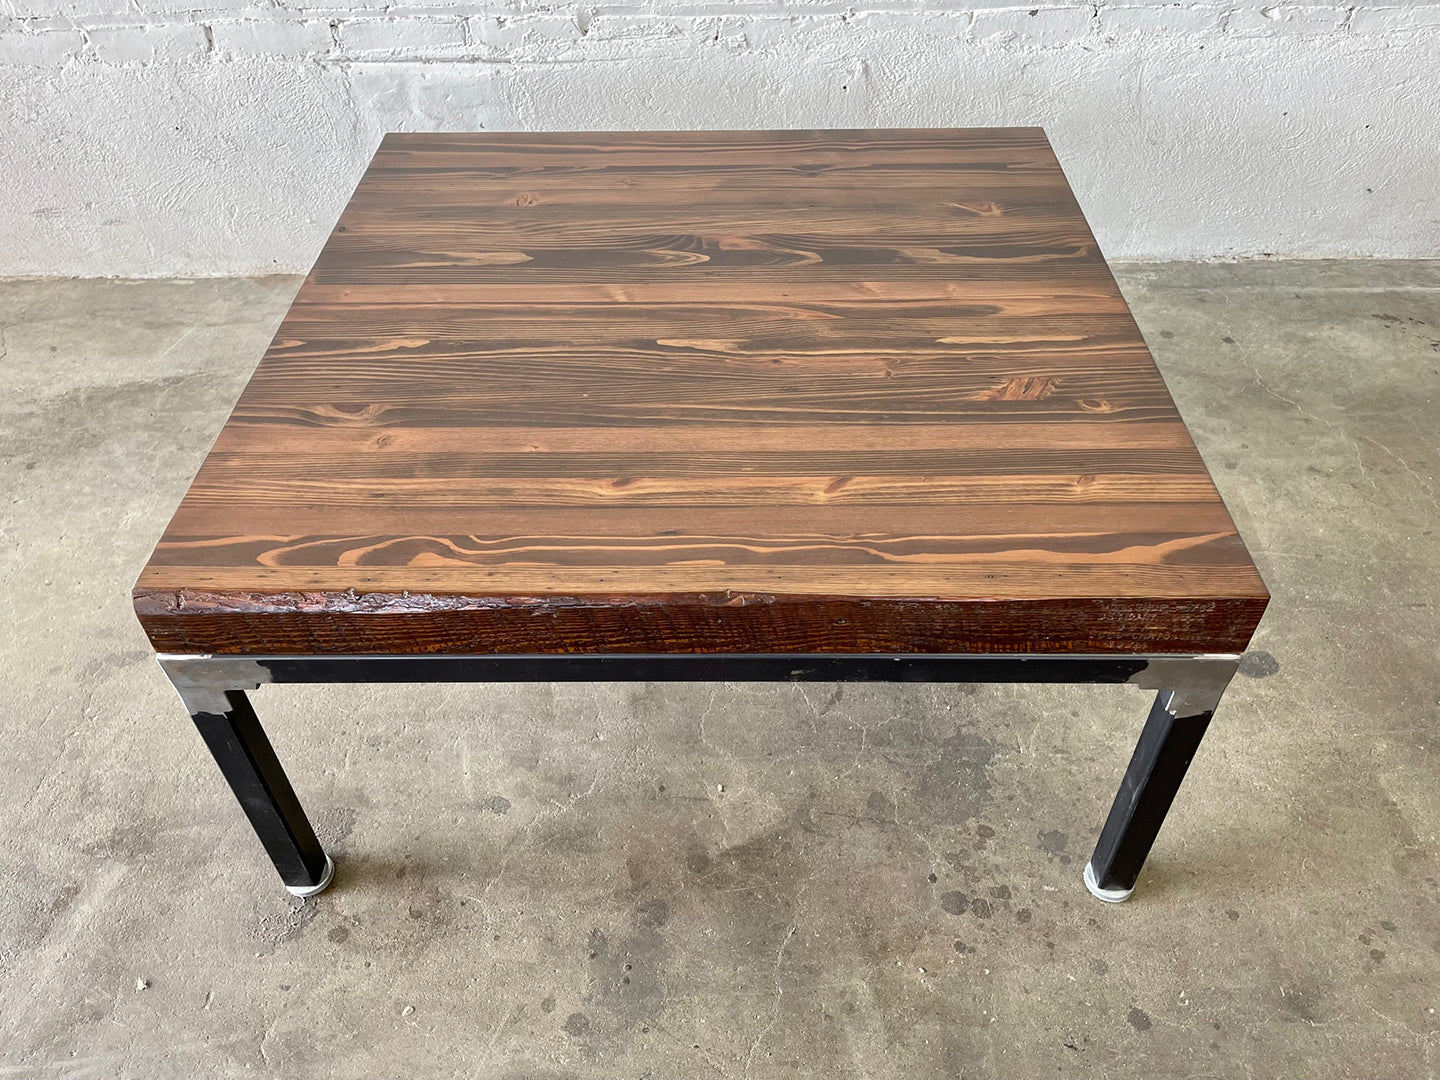 Grand Boulevard Industrial Farmhouse Coffee Table With Shelf - Walnut Stain Finish